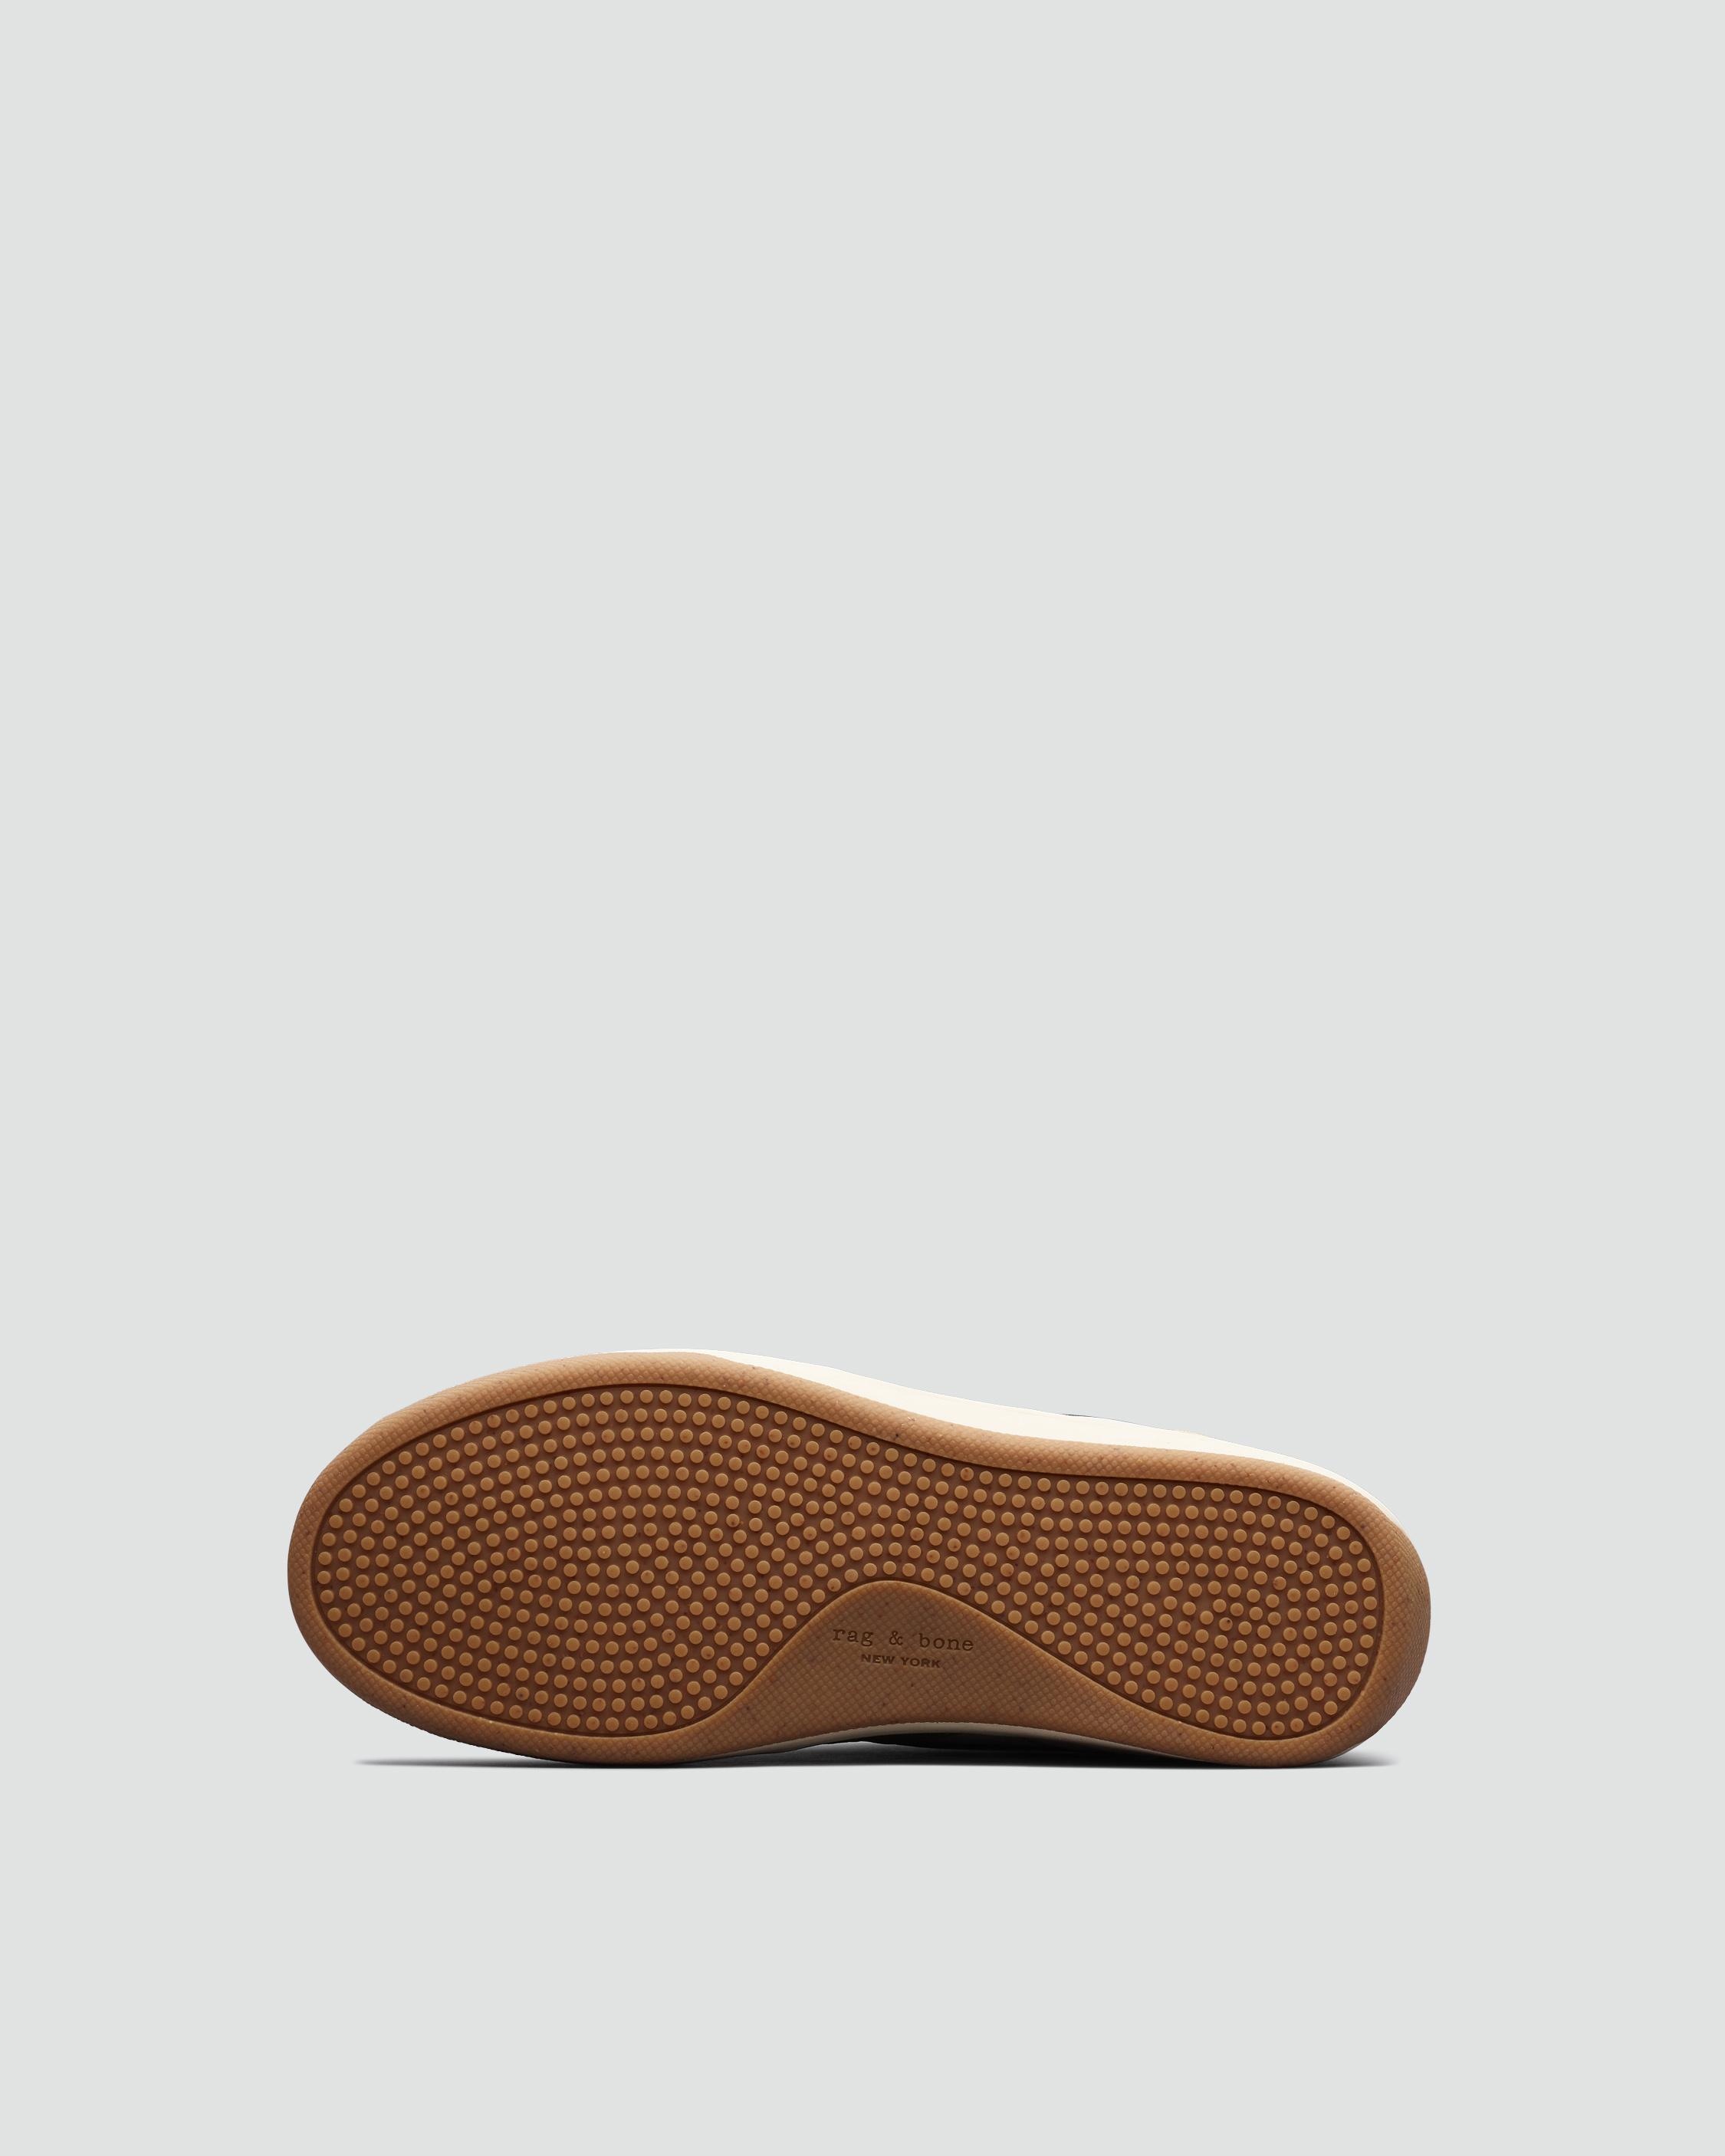 Retro Court Sneaker - Leather
Low Top Sneaker - 4